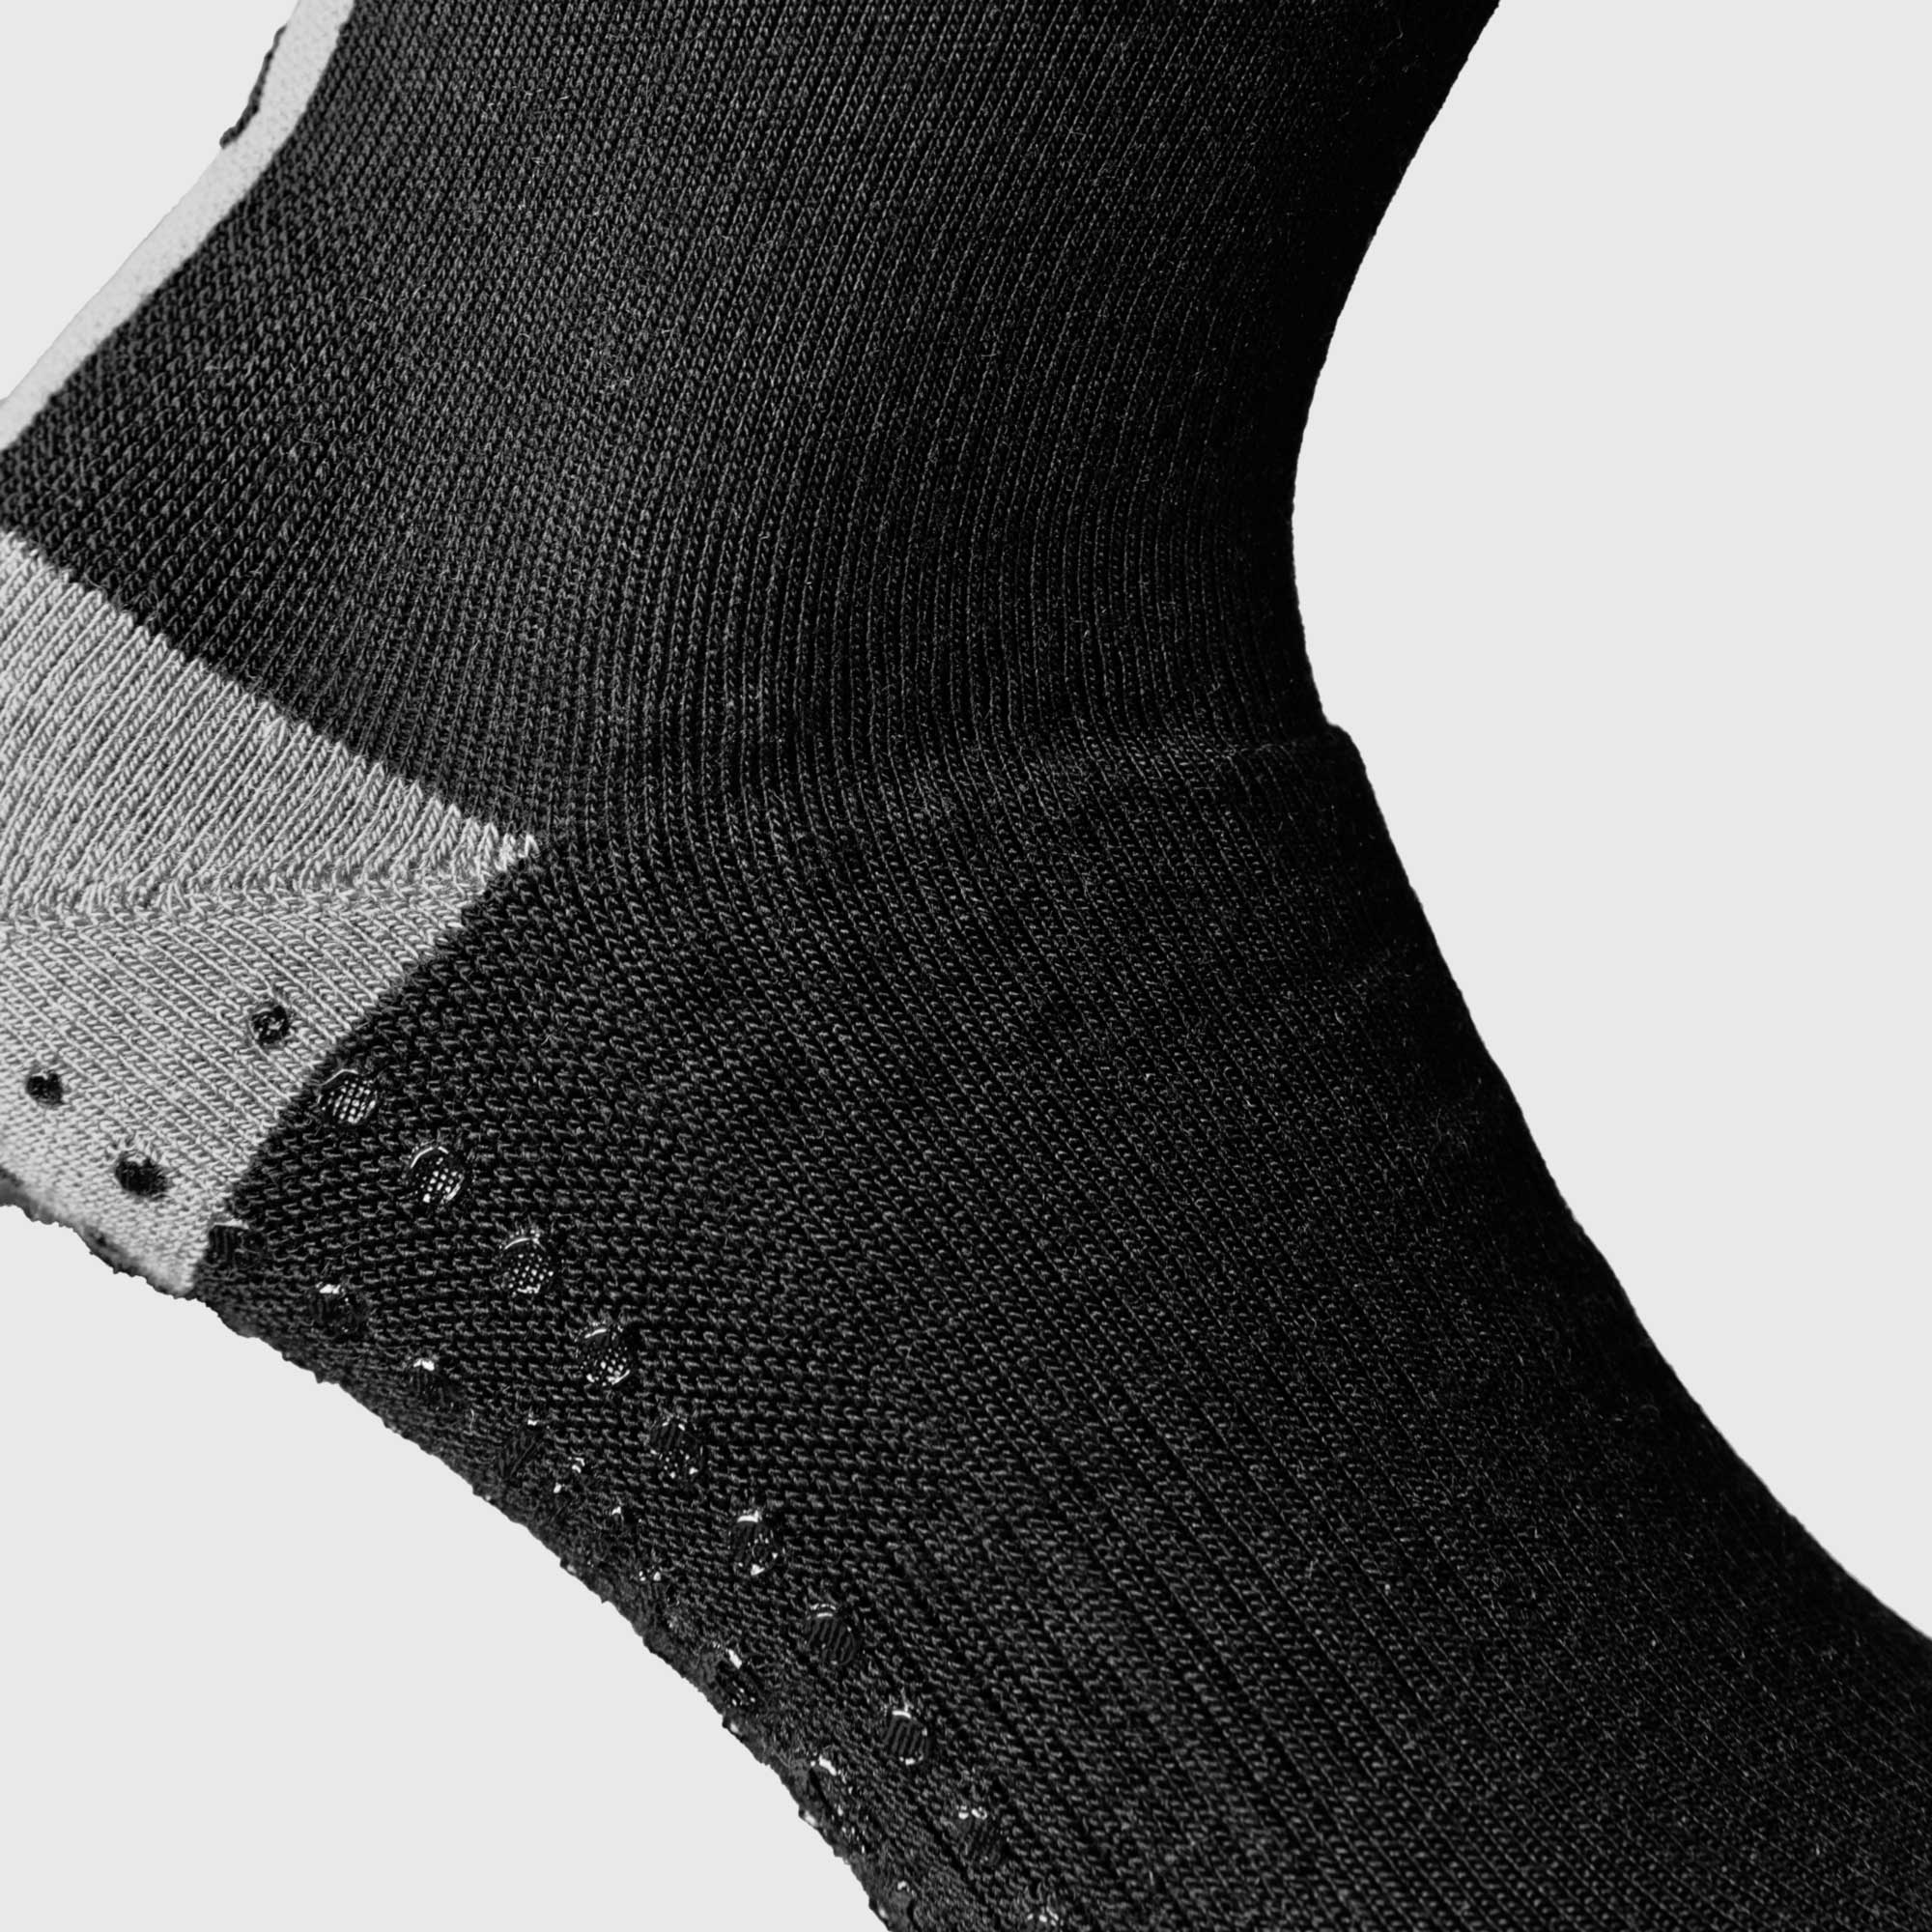 Liiteguard MERINO PRO-TECH Medium socks SCHWARZ